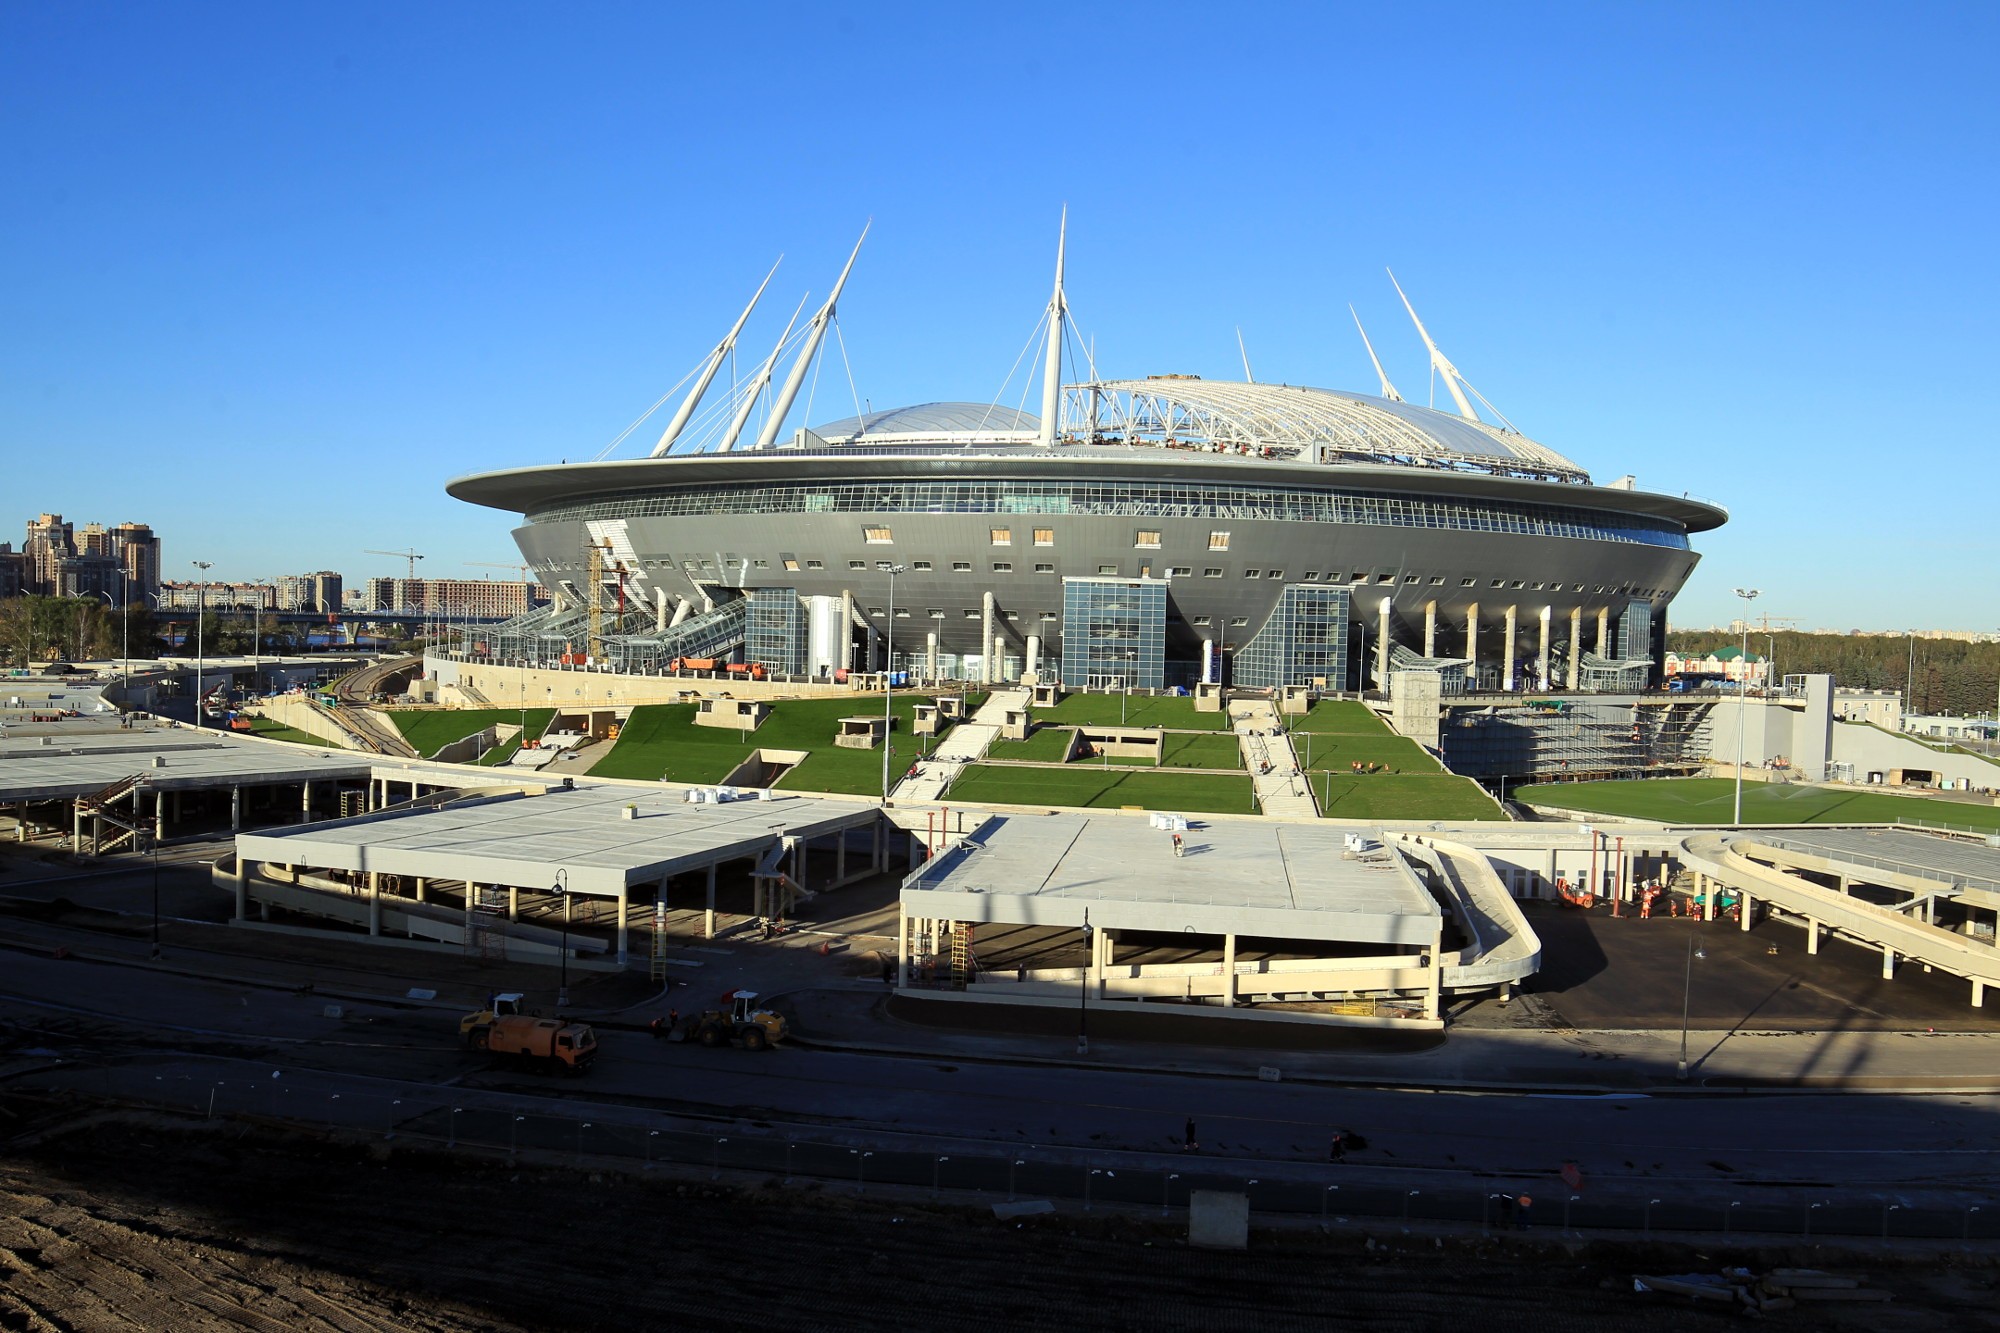 Адрес стадиона санкт петербург